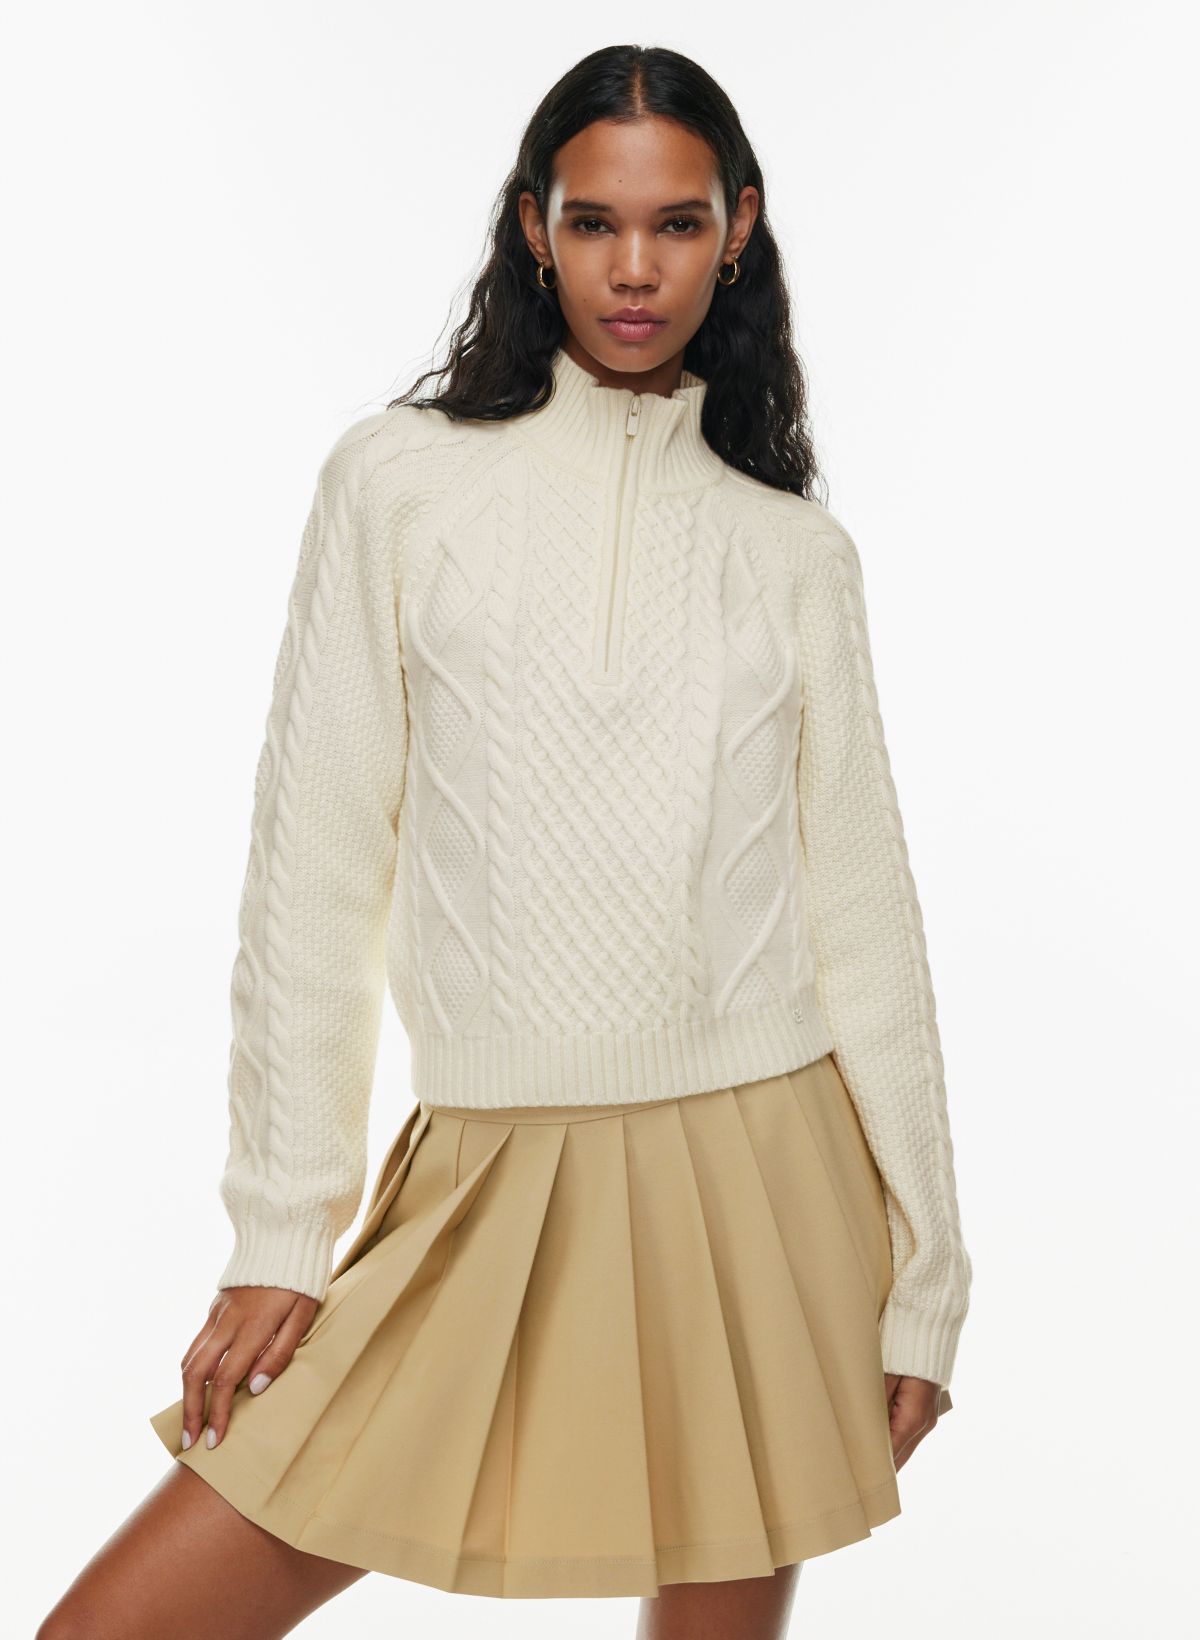 ZARA Sweater Dress Women’s Ivory Short Sleeves Quarter Zip Ribbed Knit Size  L 